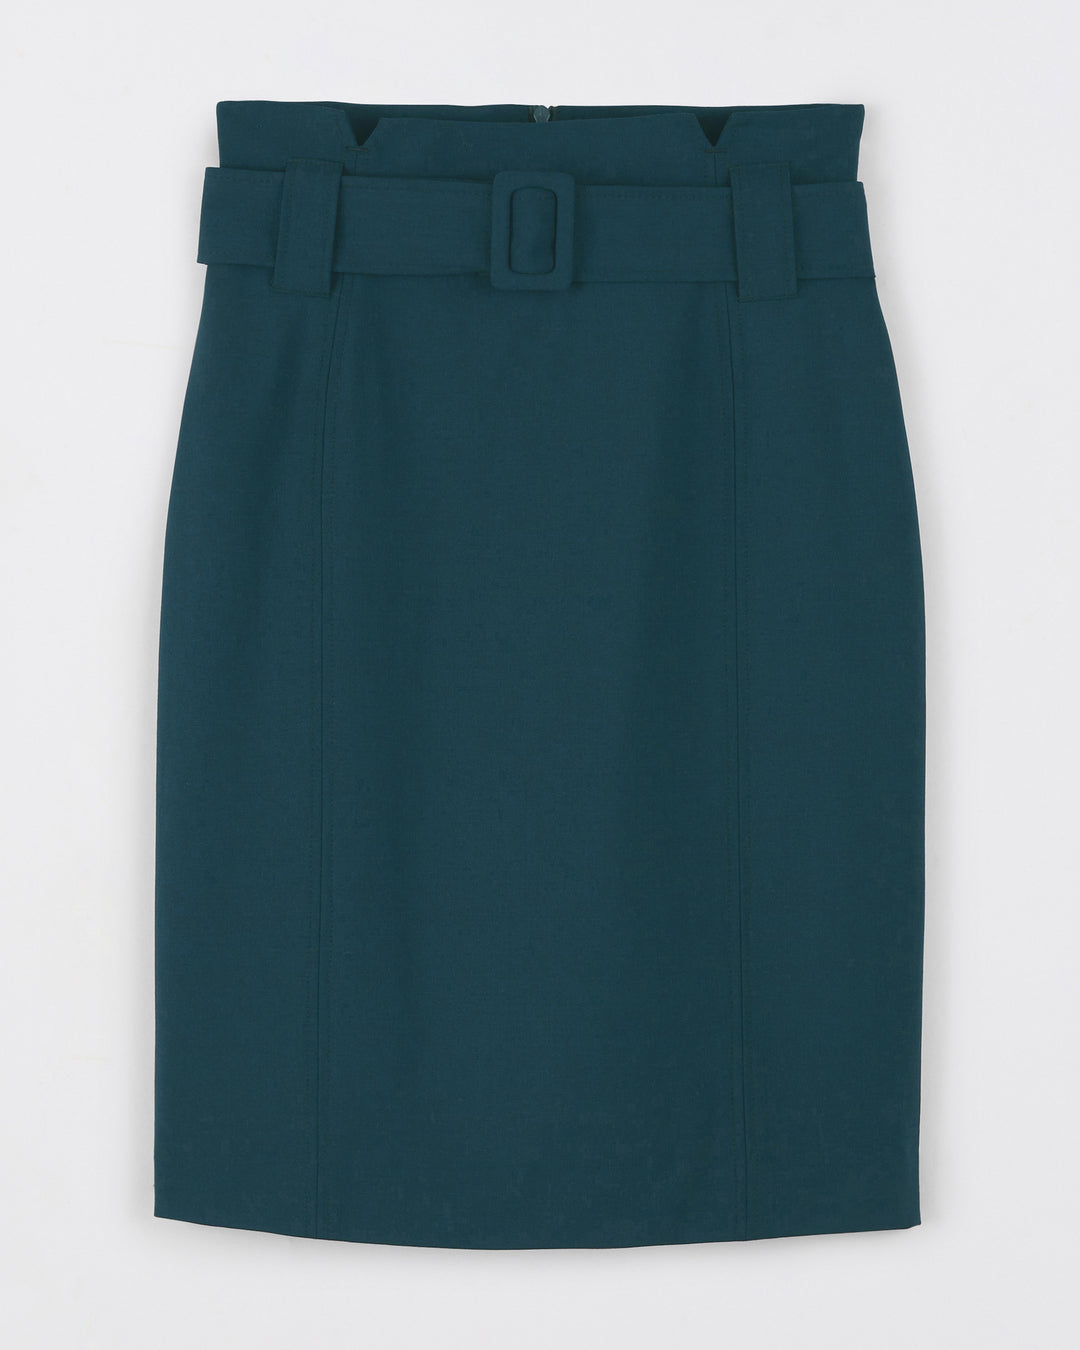 Short-pencil-skirt-High-waist-Covered-belt-tone-on-tone-Removable-belt-Back-slit-for-ease-17H10-tailors-for-women-paris-